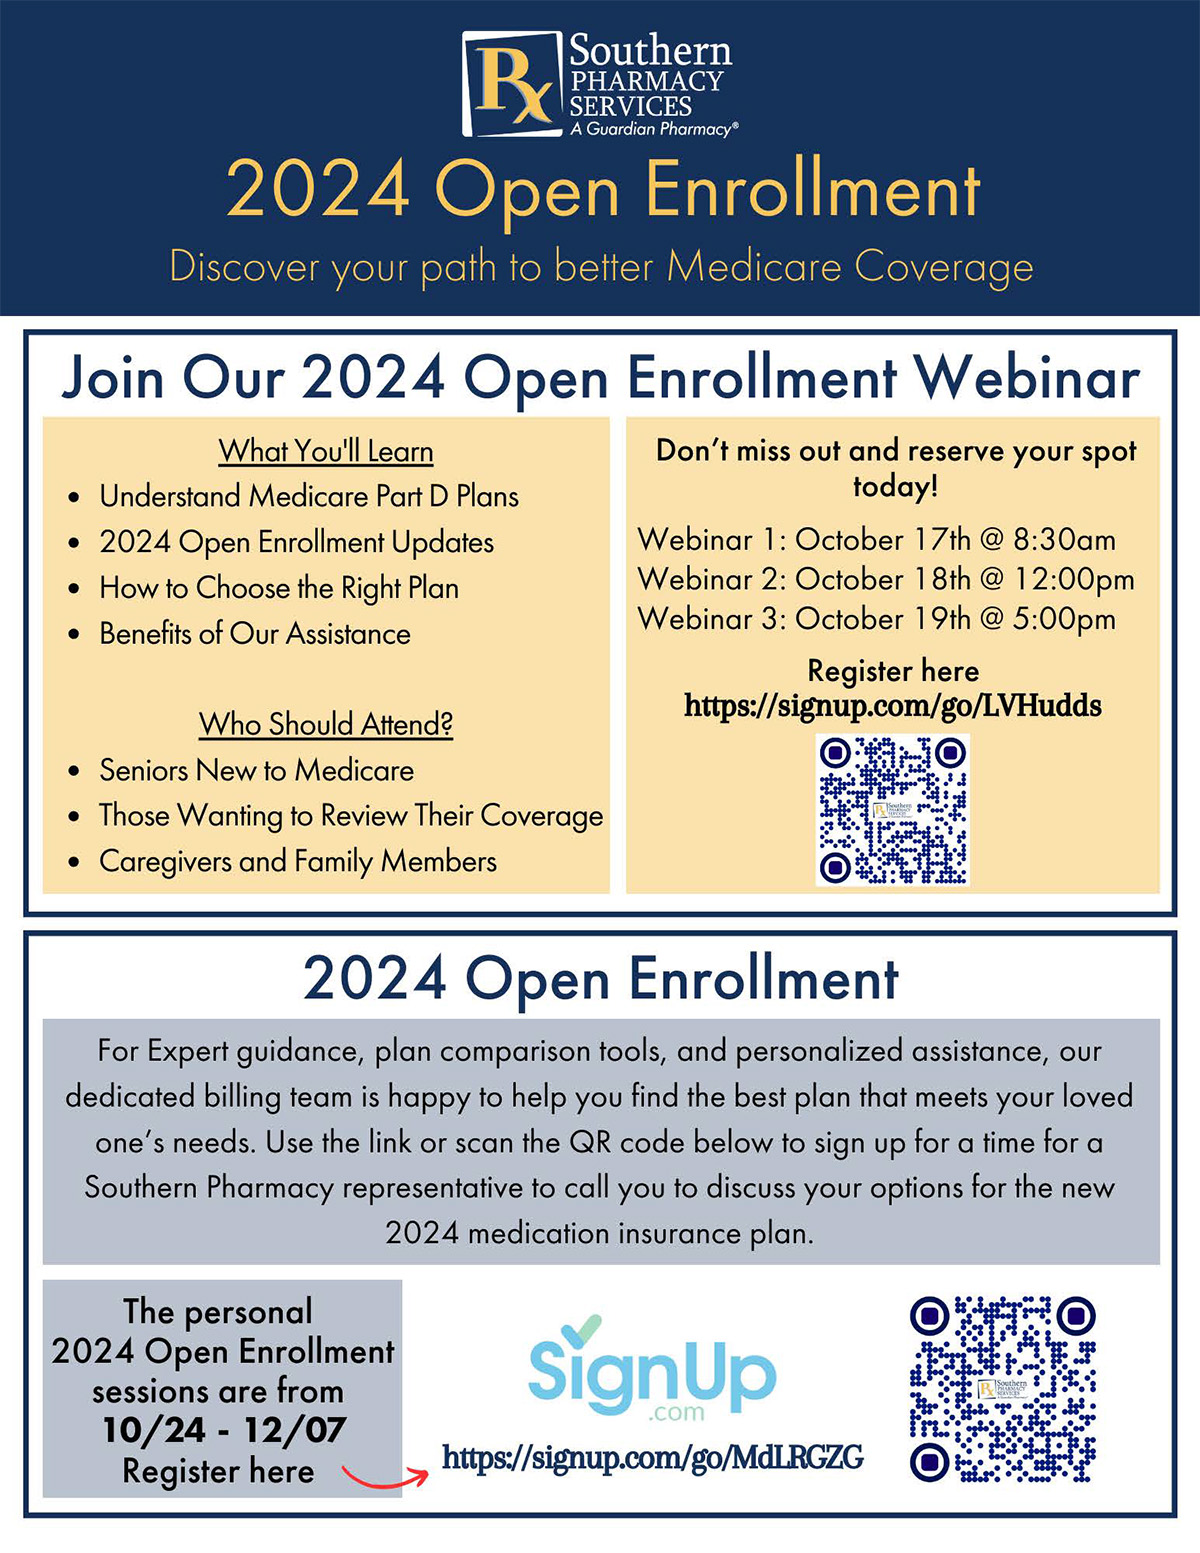 Open Enrollment for 2024 coverage starts soon! Prepare today